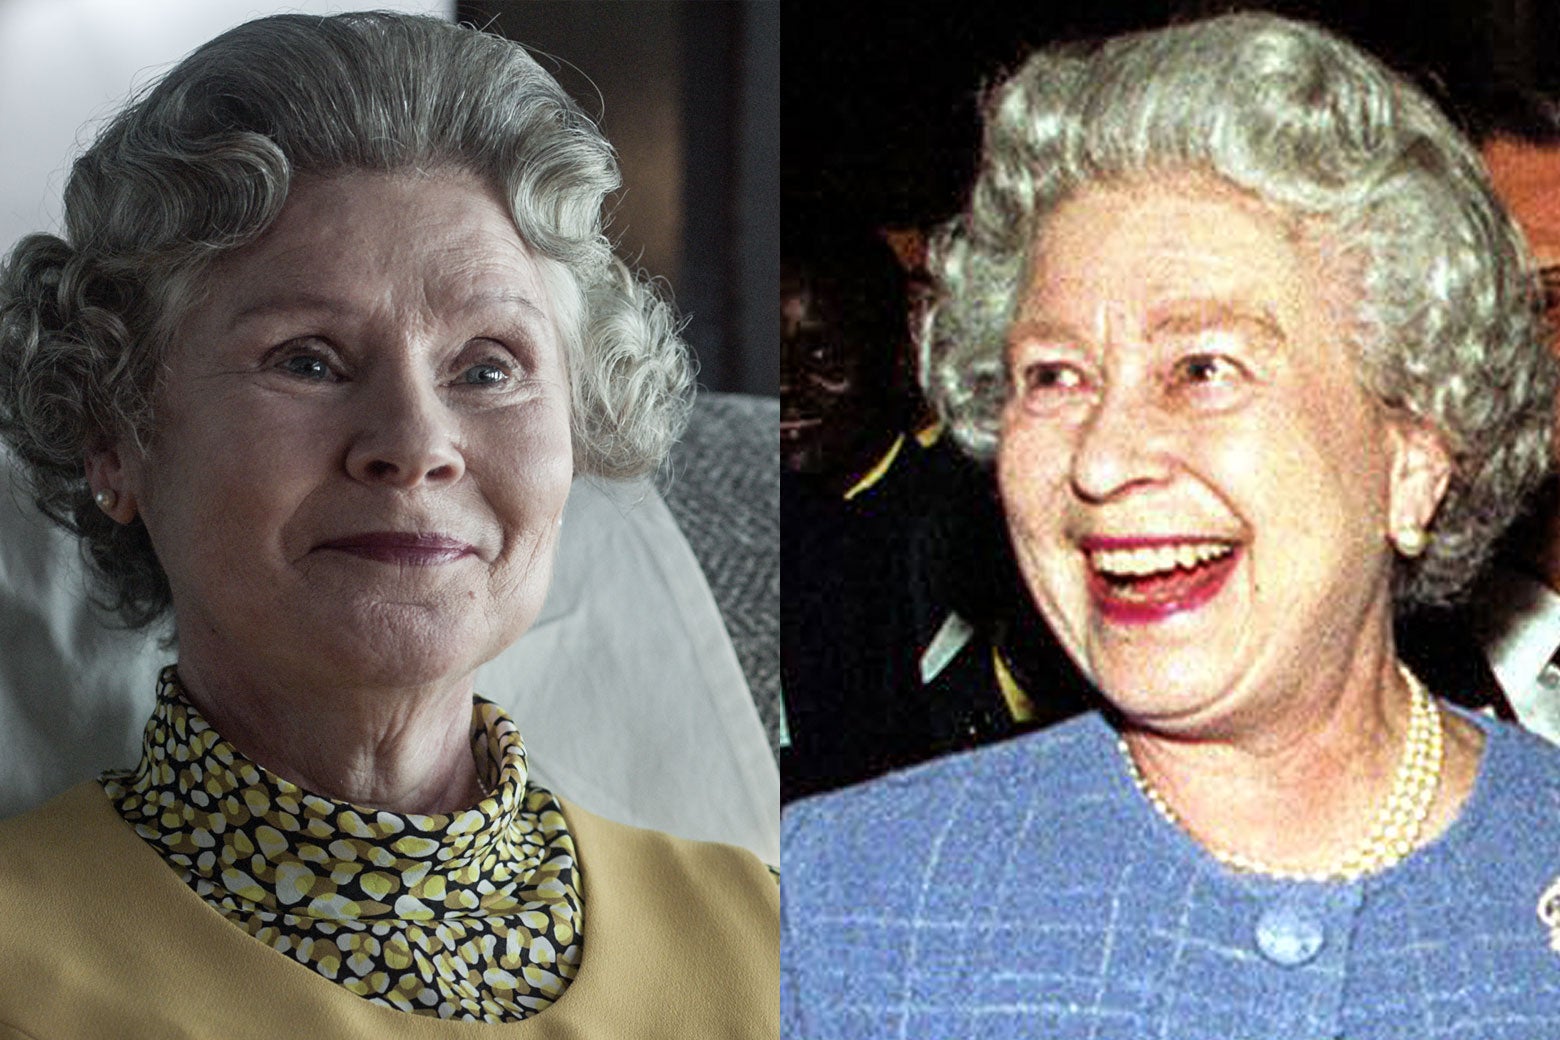 Left: Imelda Staunton as Elizabeth II. Right: Elizabeth II.